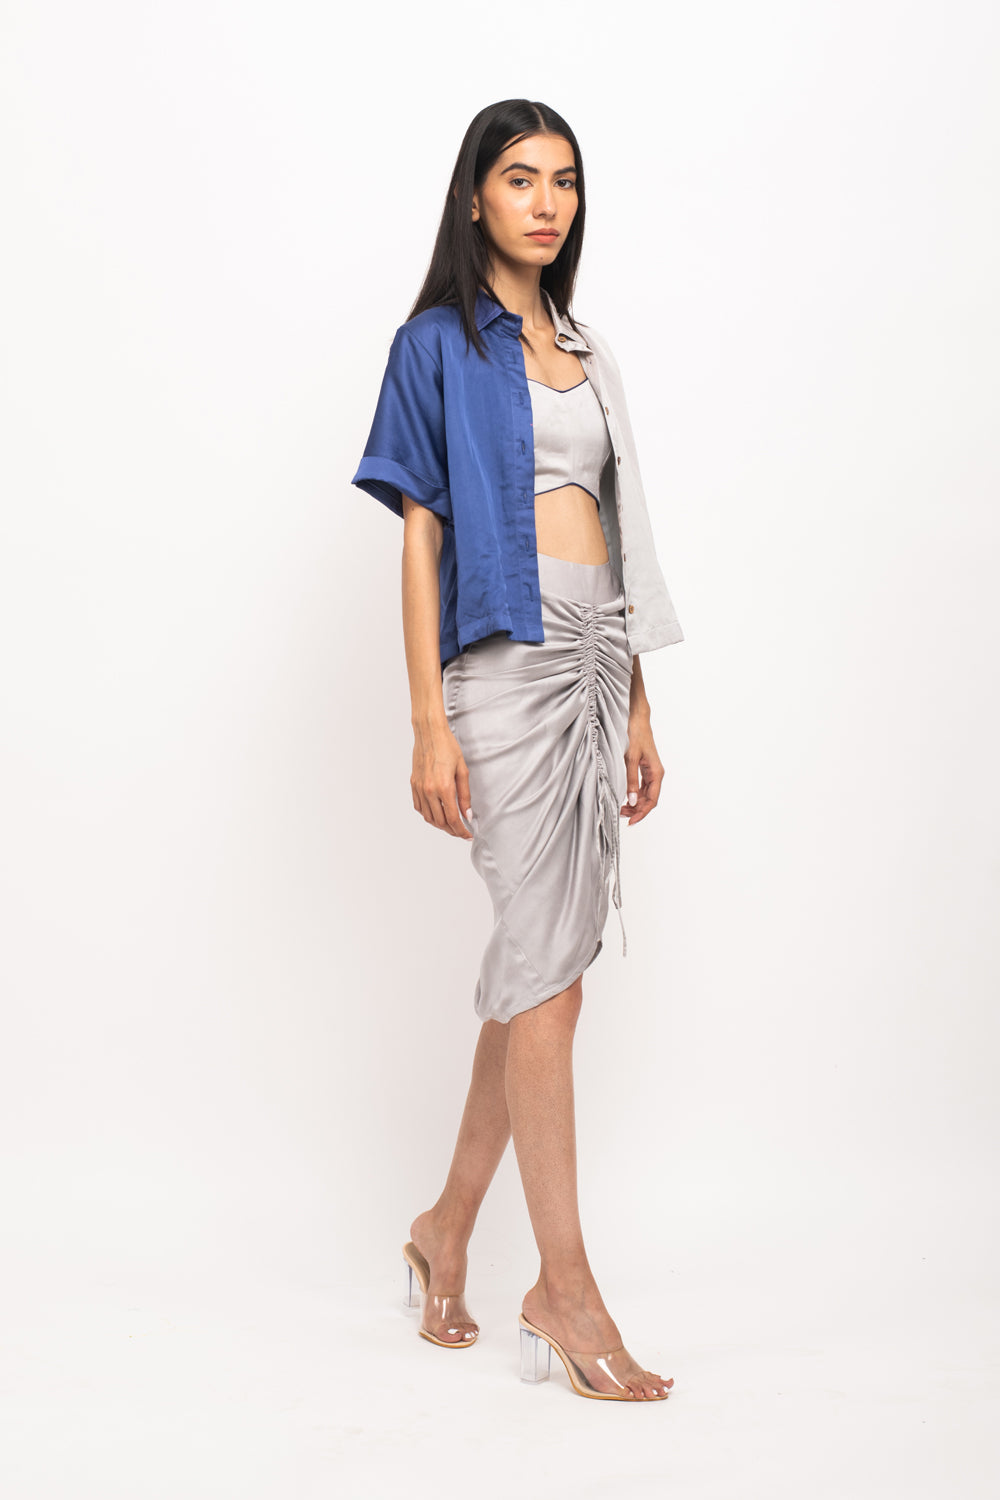 Grey-Blue Rouching Skirt Set